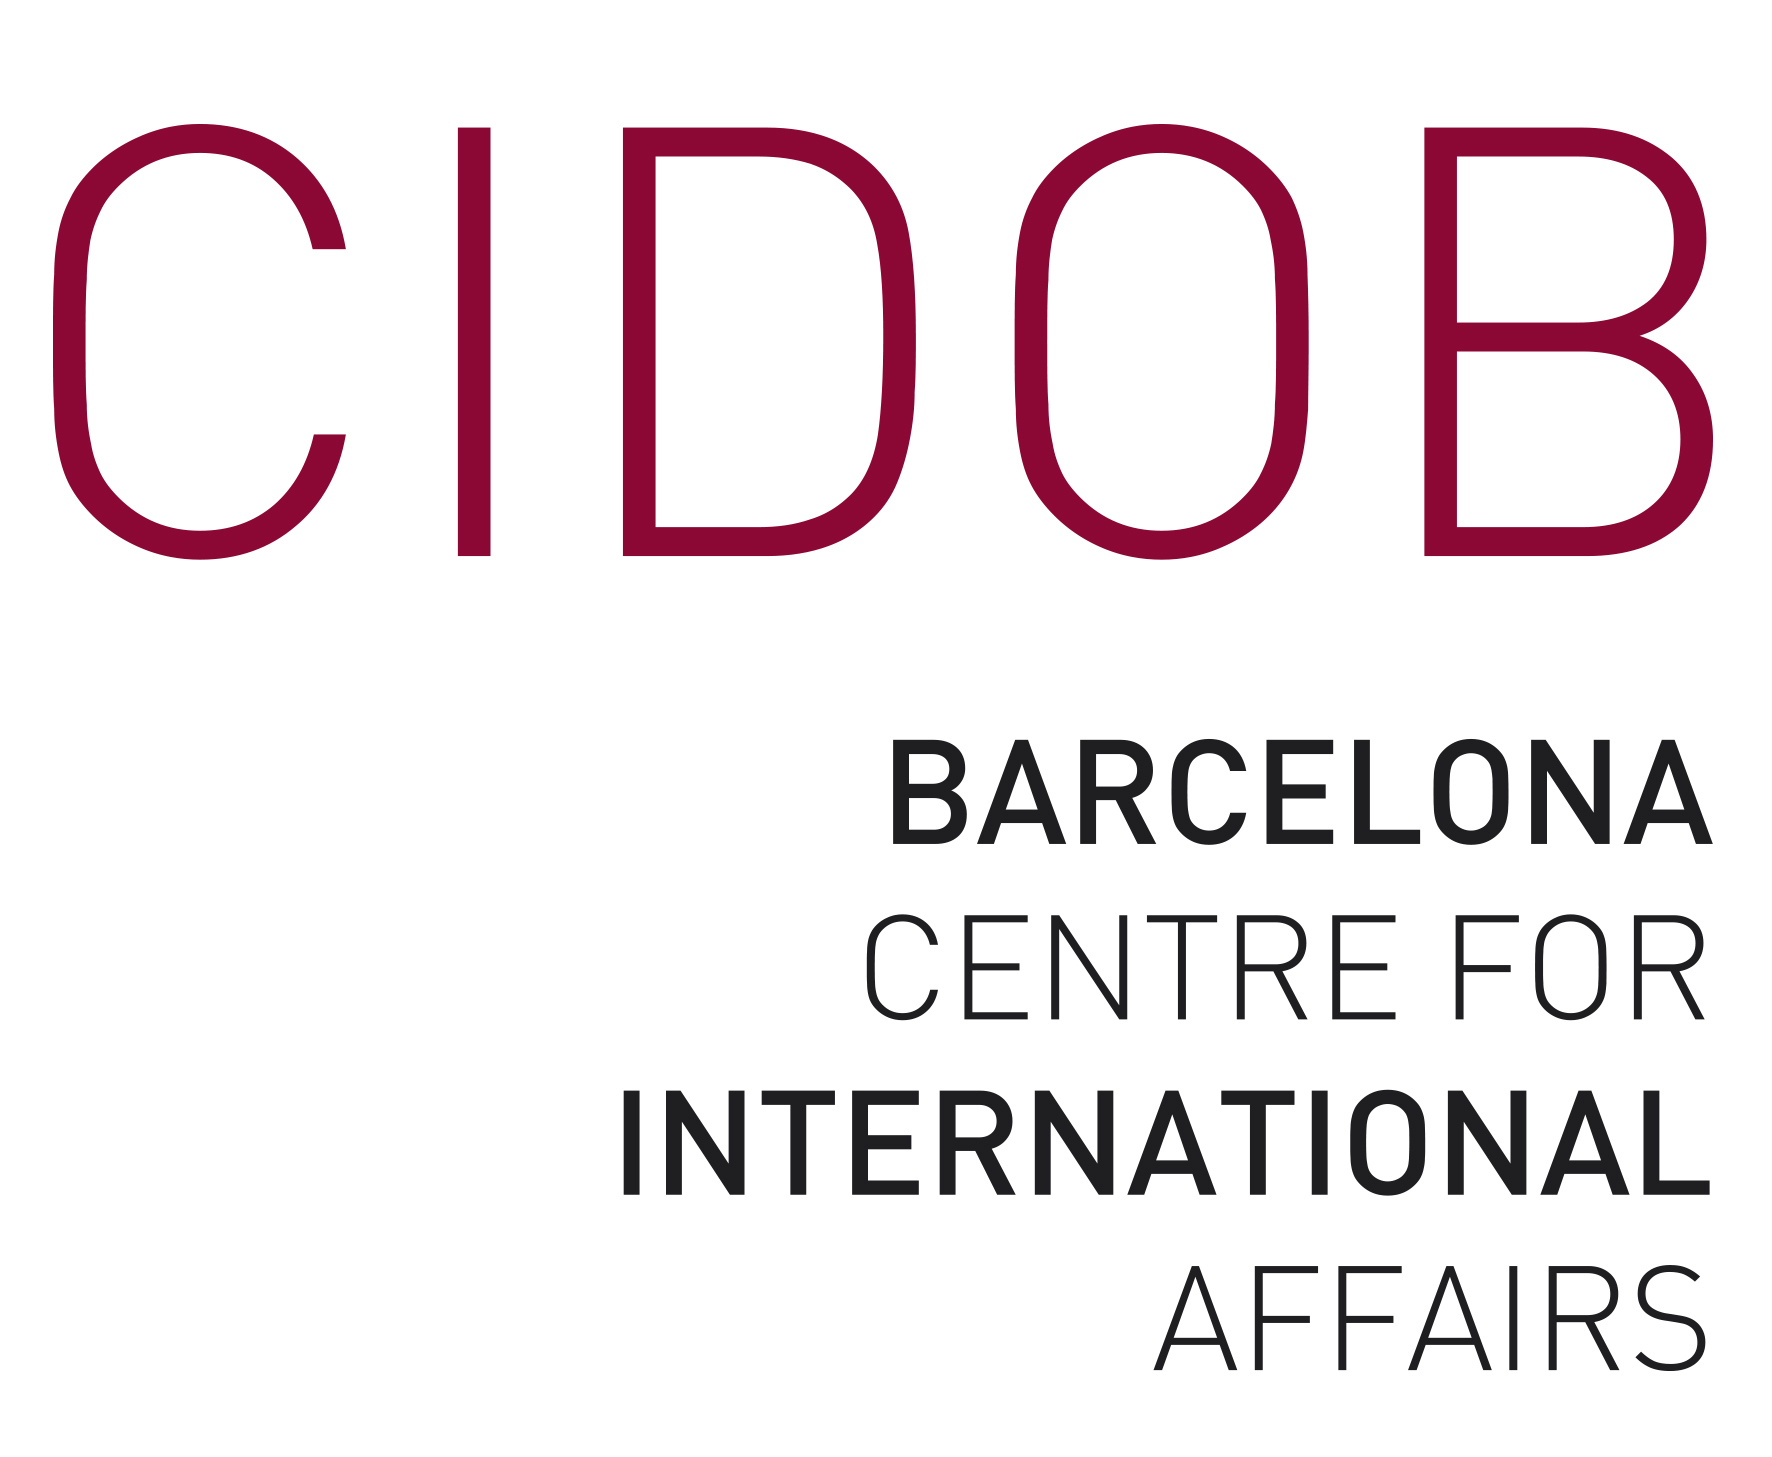 Barcelona Centre for International Affairs – CIDOB